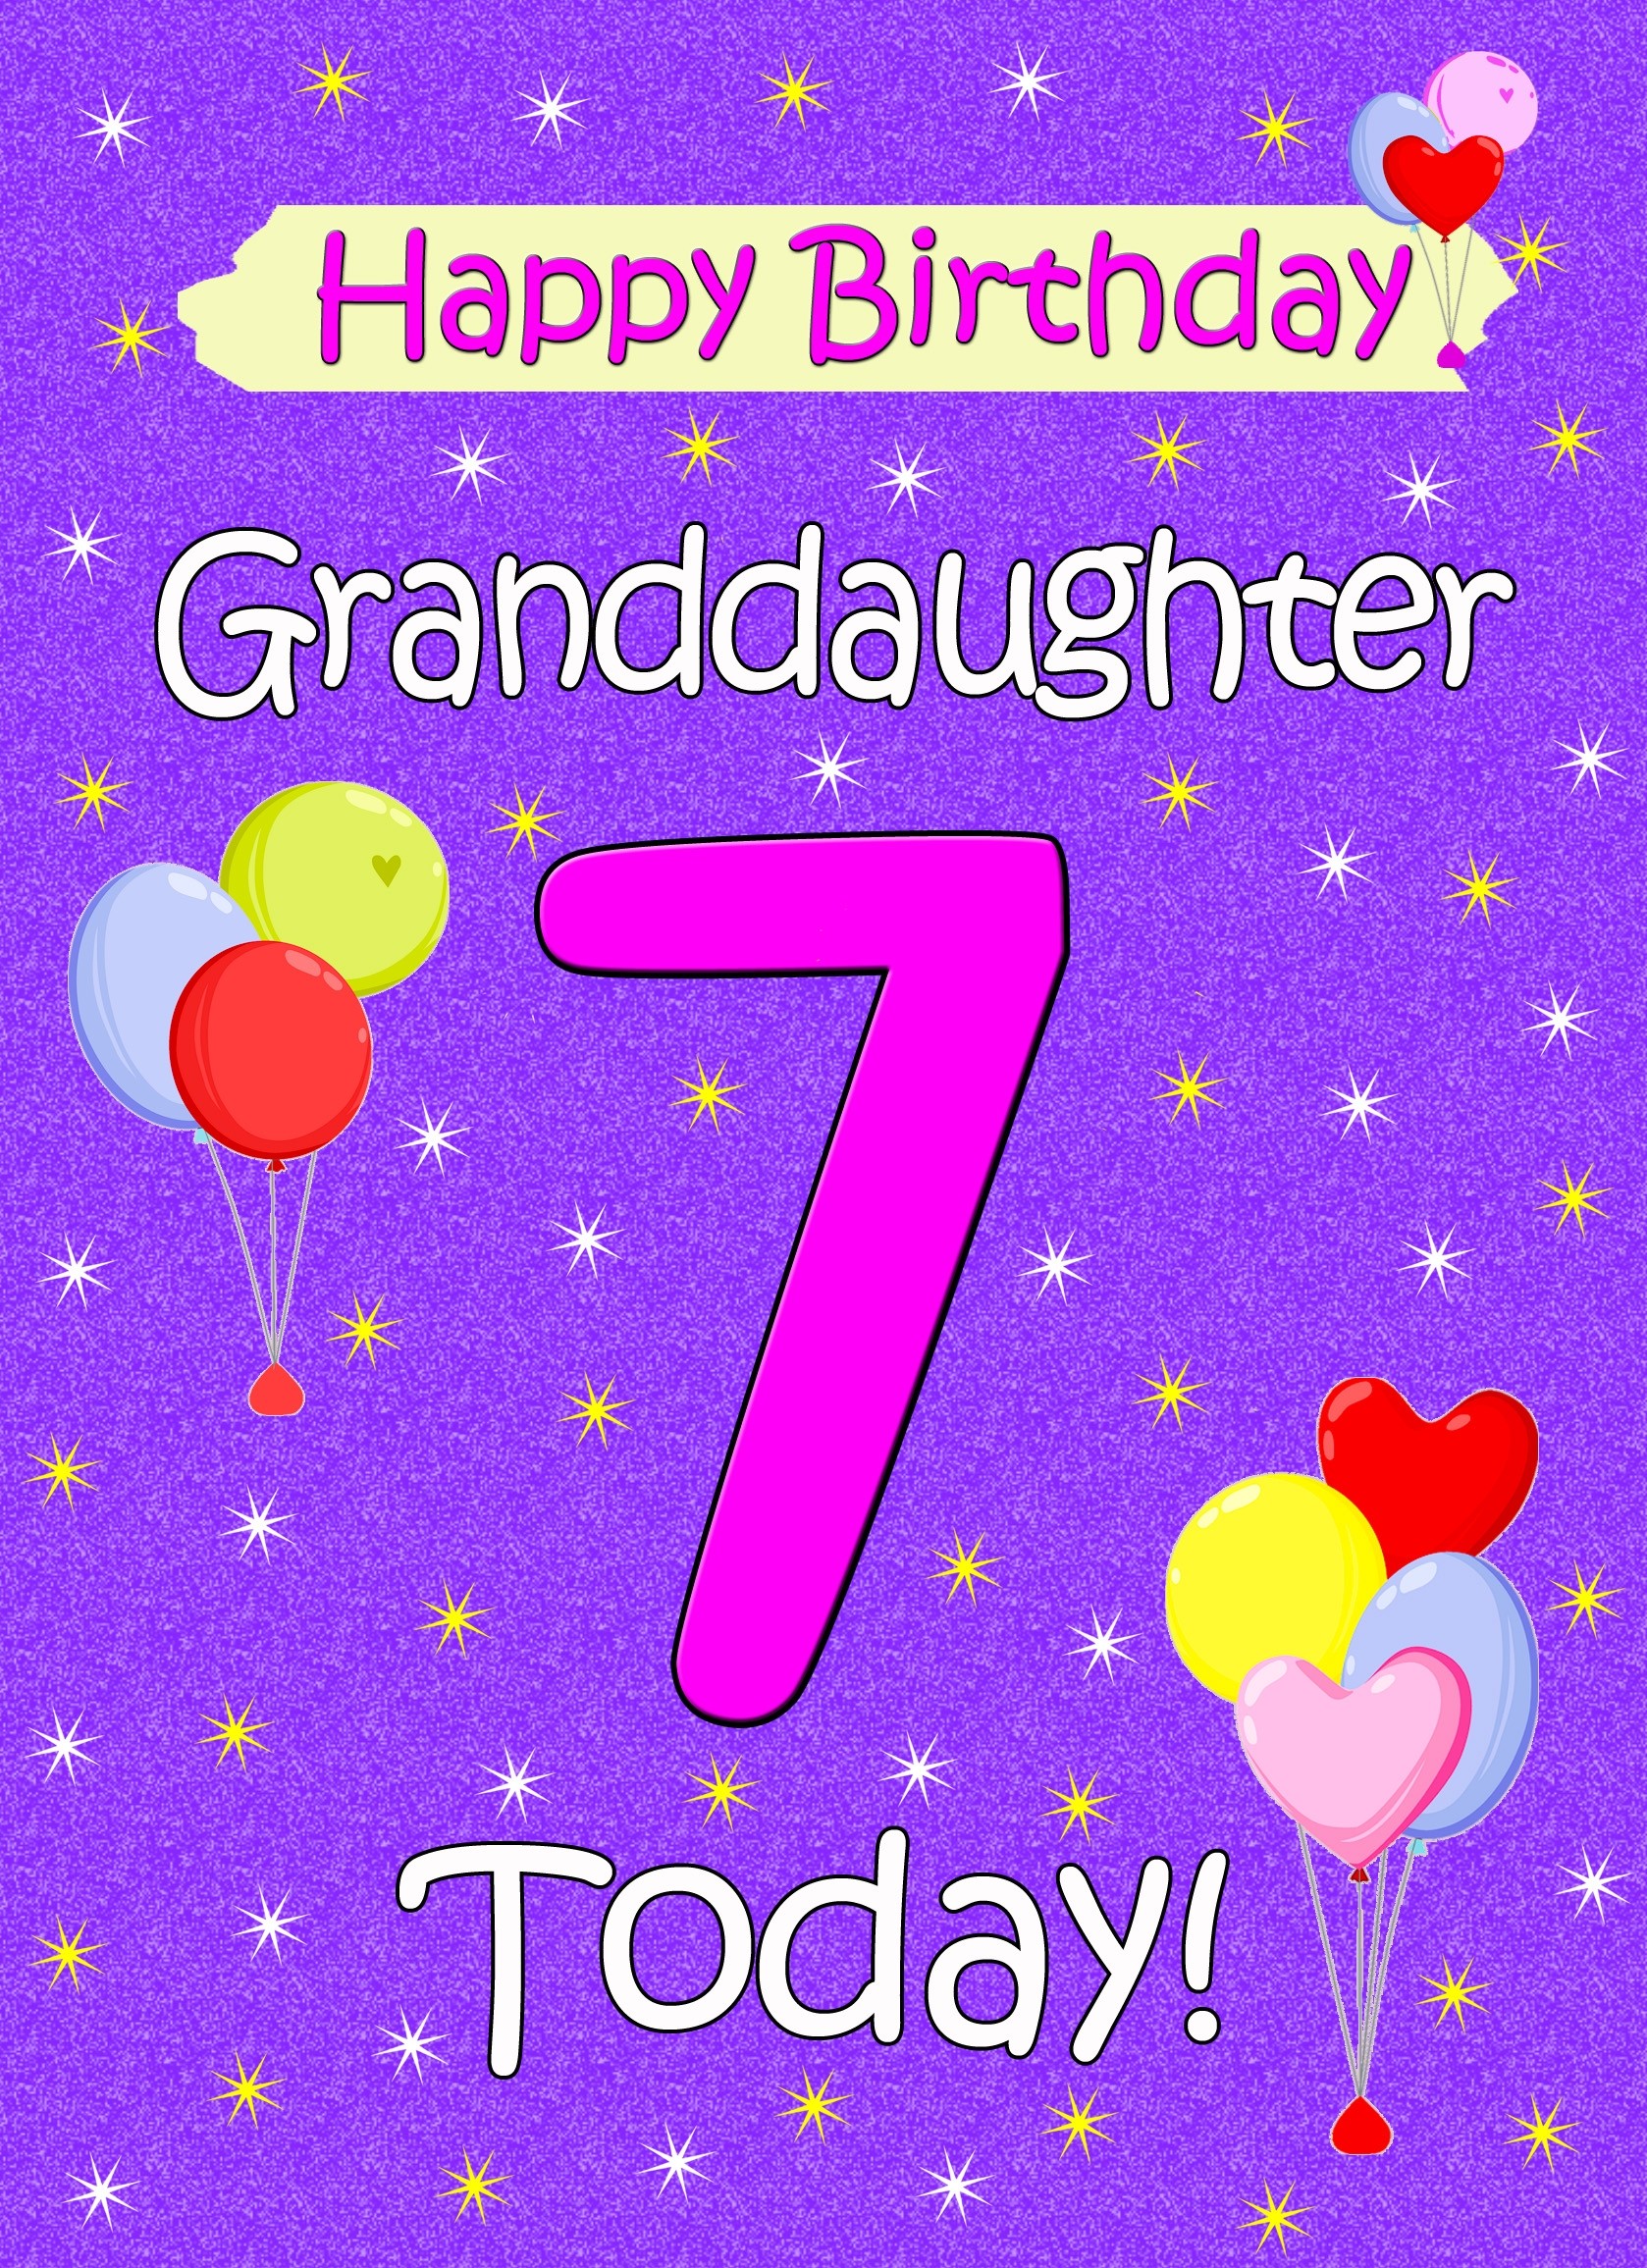 Granddaughter 7th Birthday Card (Lilac)